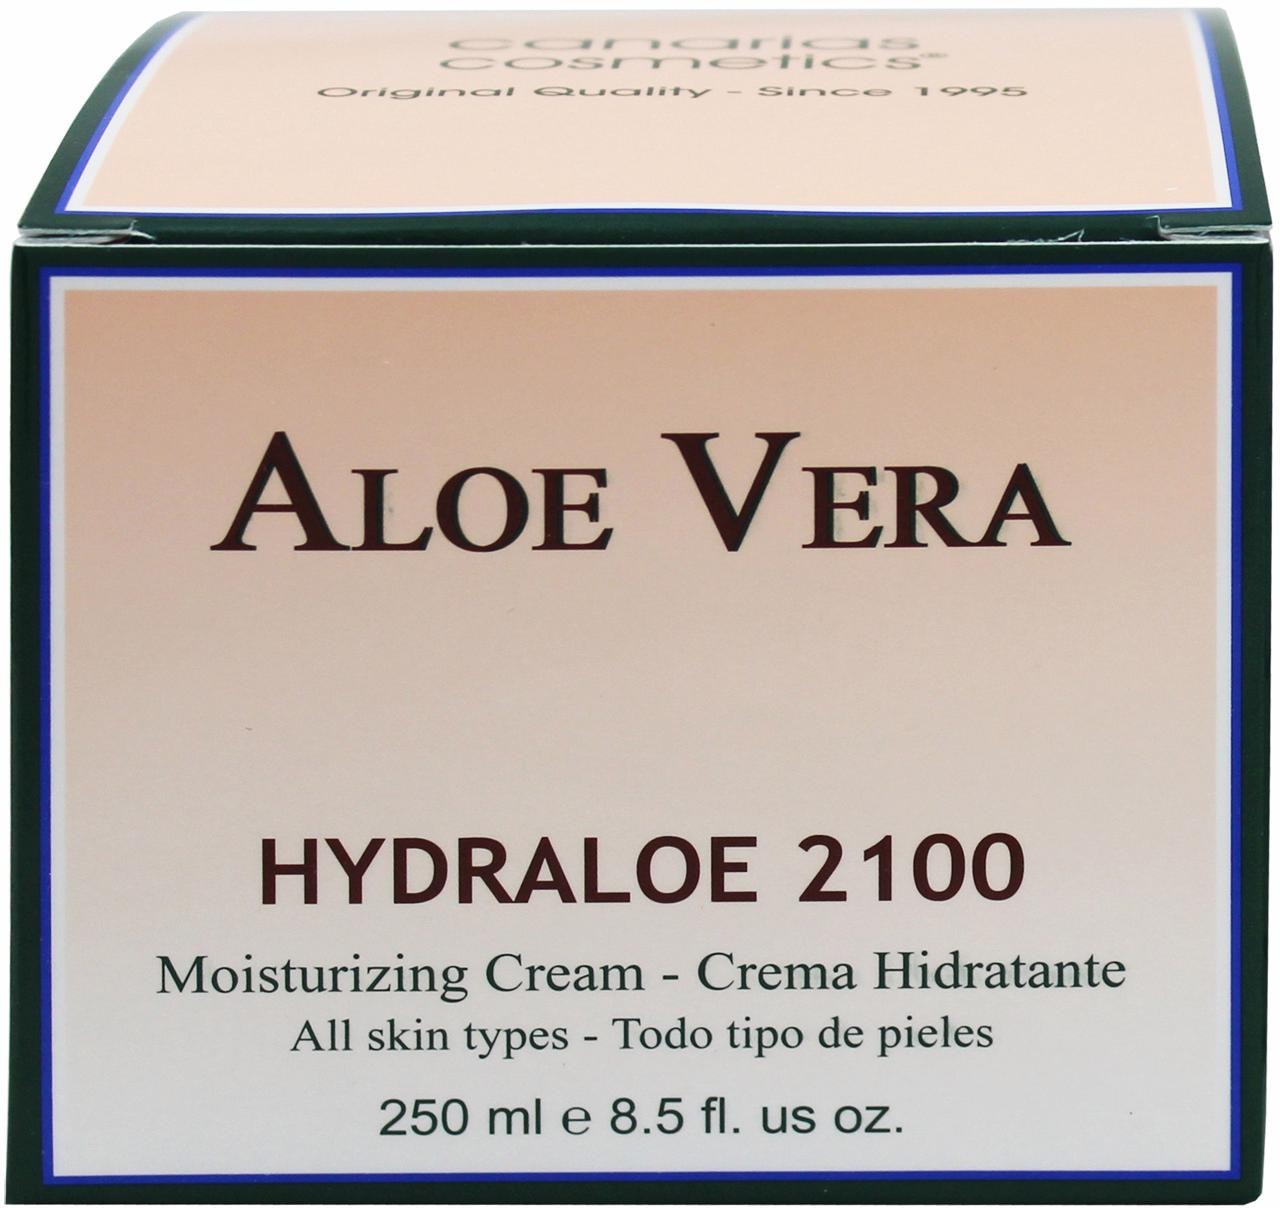 canarias cosmetics Feuchtigkeitscreme »Hydraloe 2100«